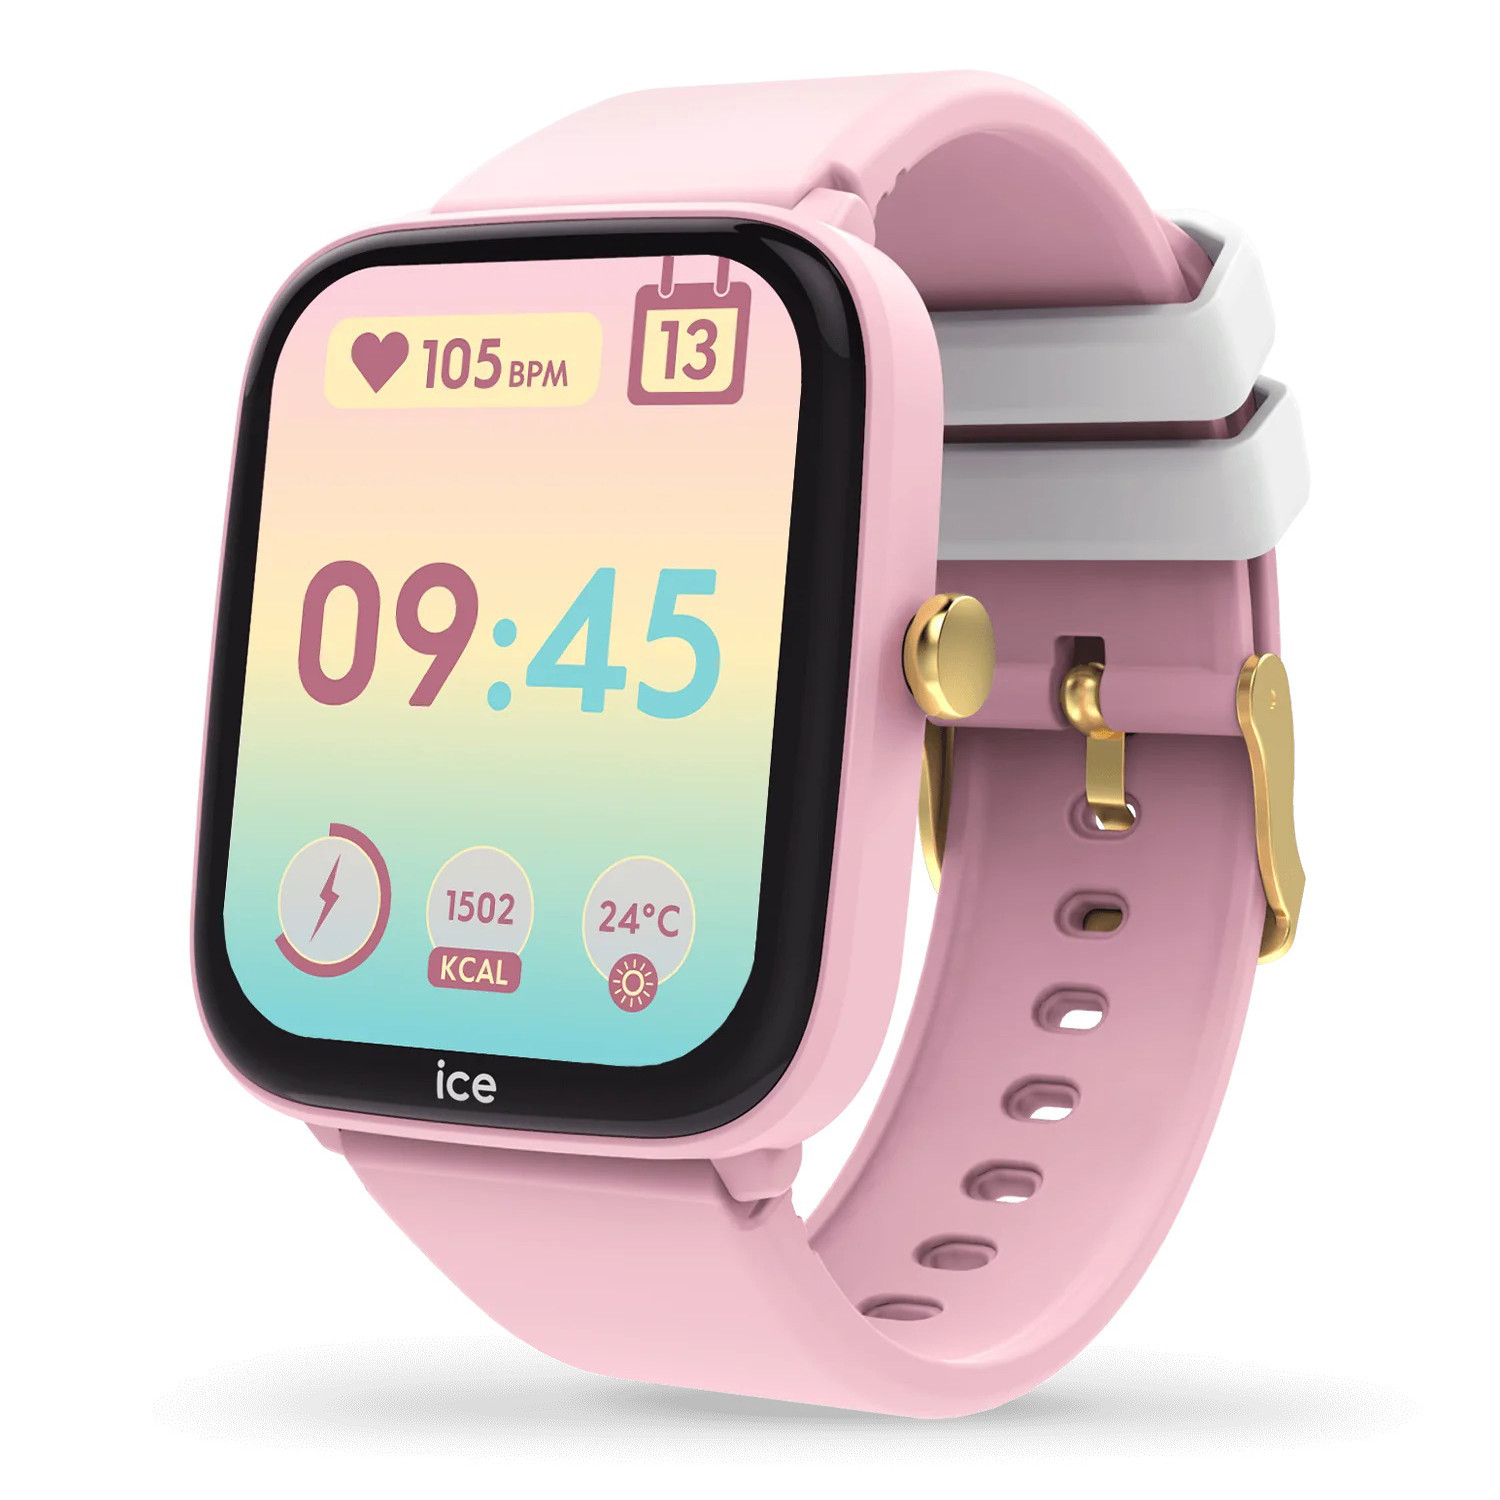 Montre connectée Ice Watch smart junior 2.0
Pink